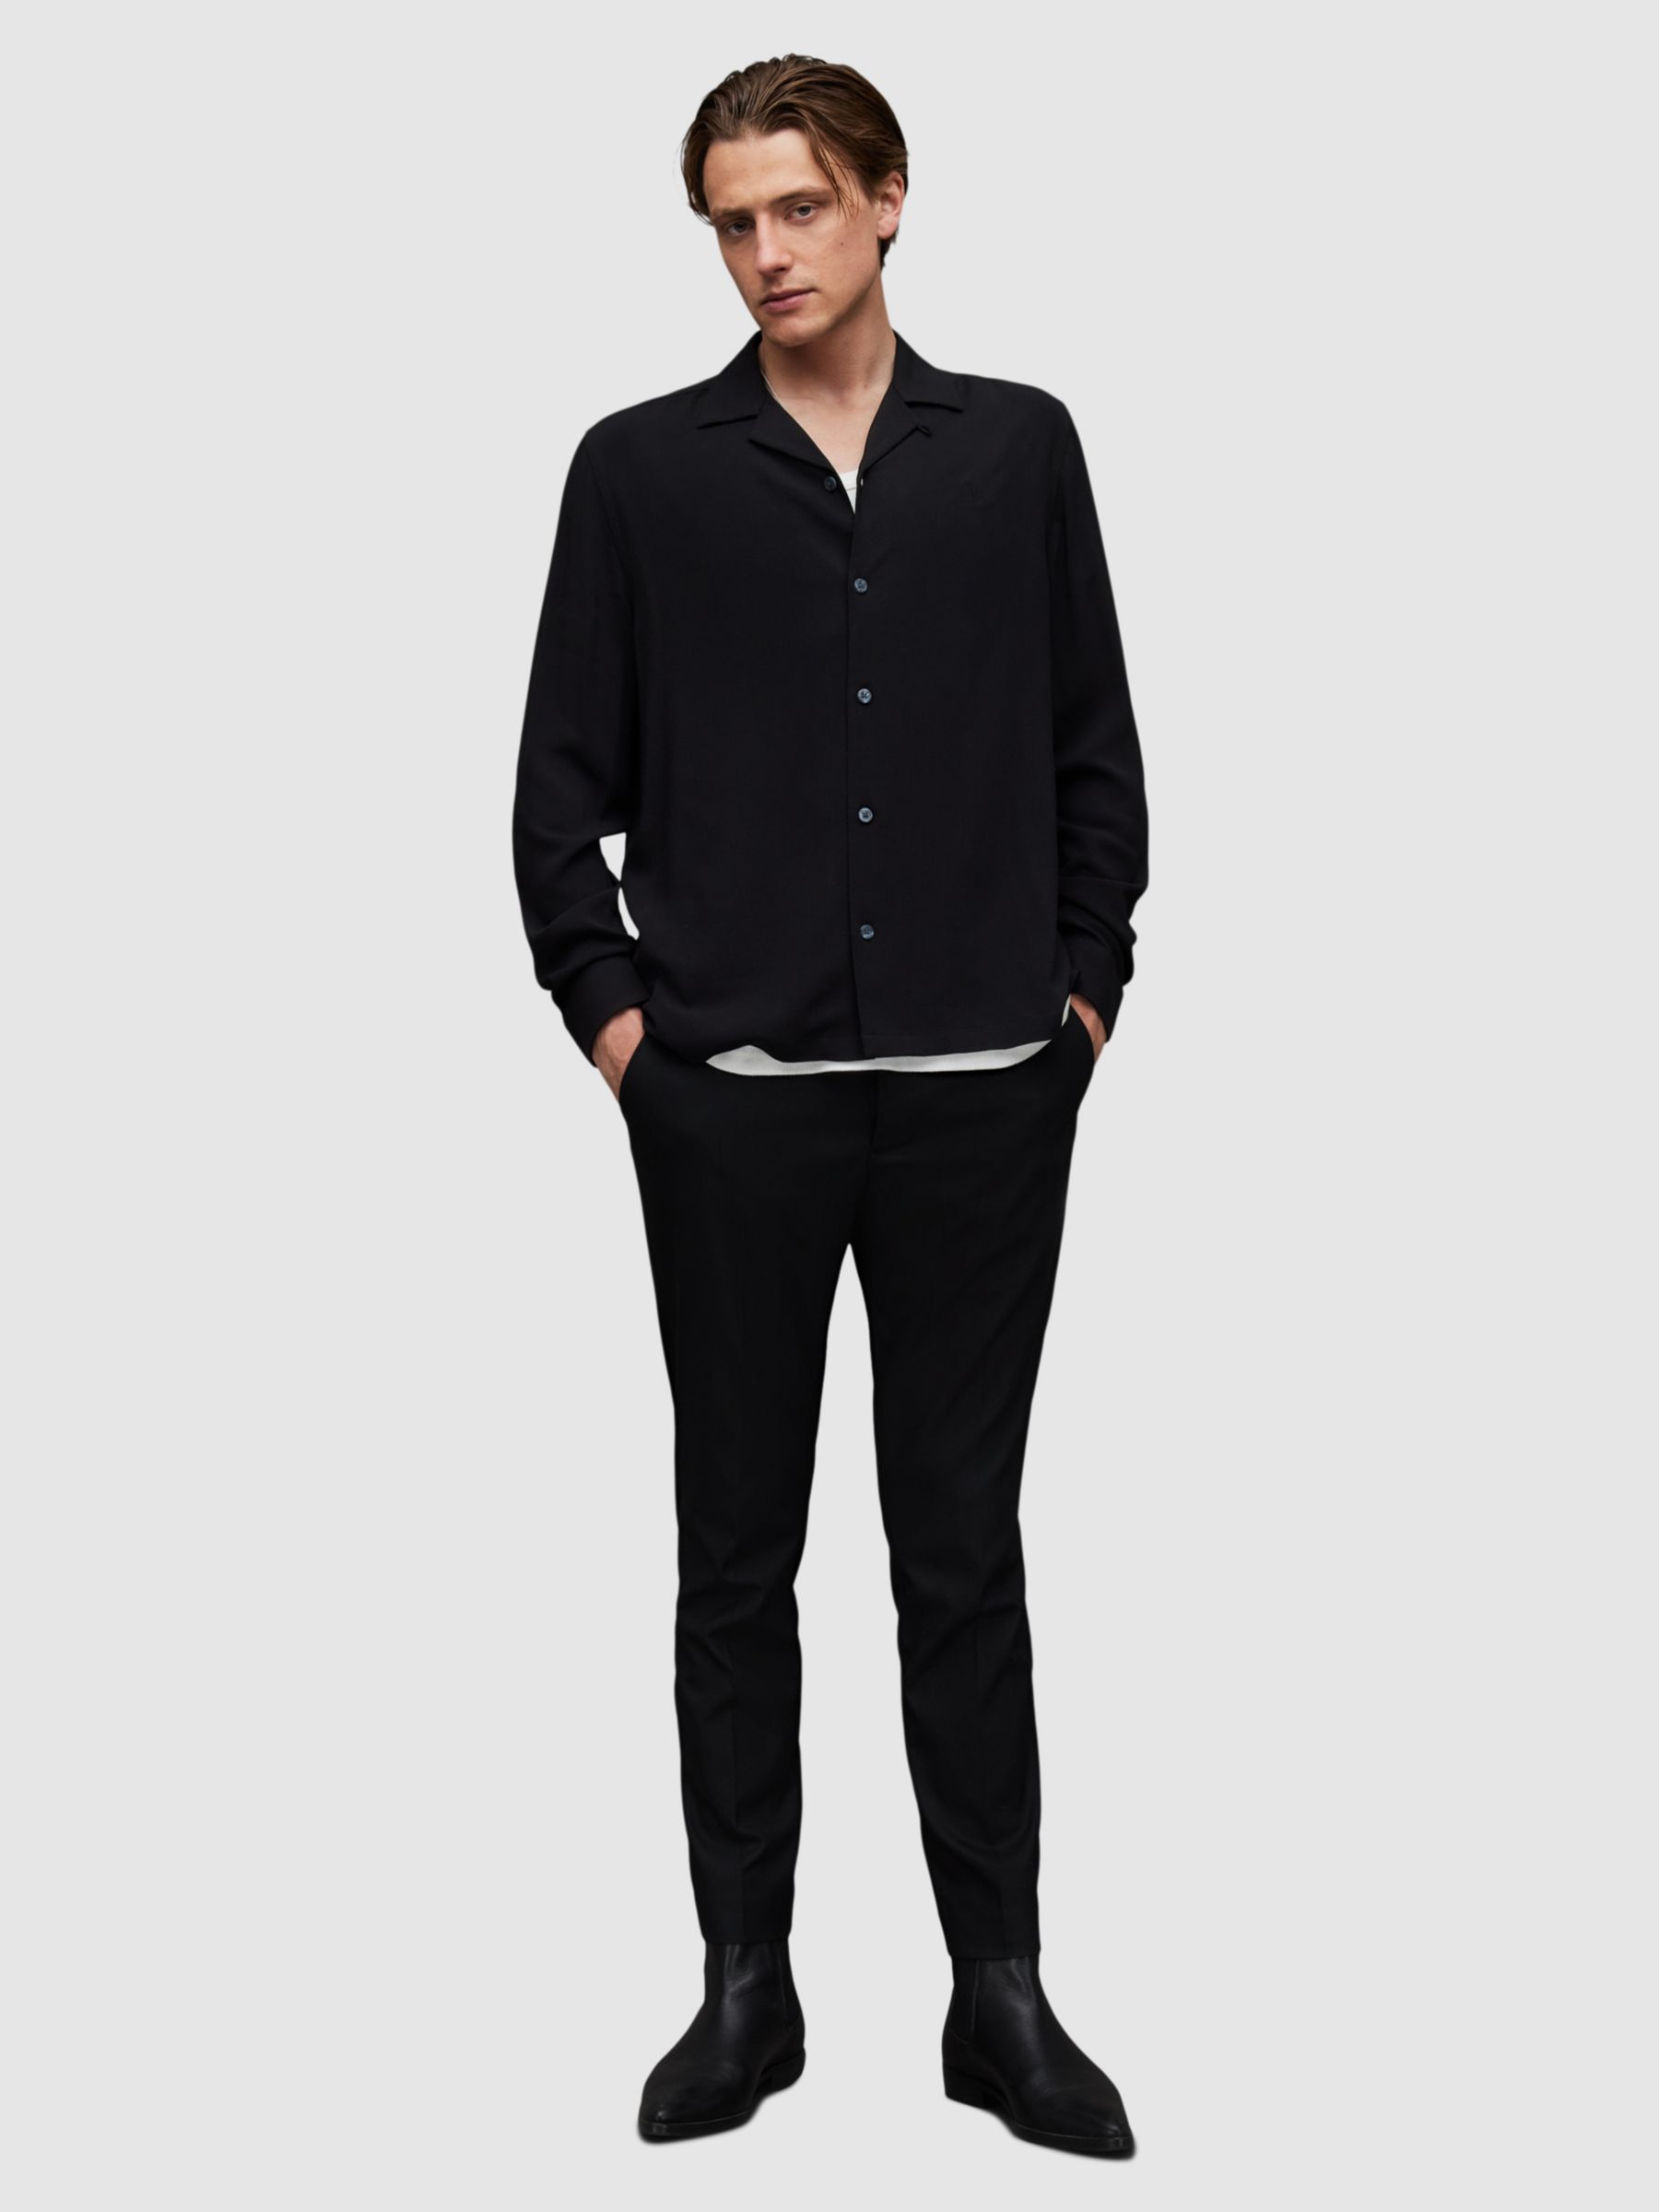 AllSaint Venice Long Sleeve Shirt, Black, L